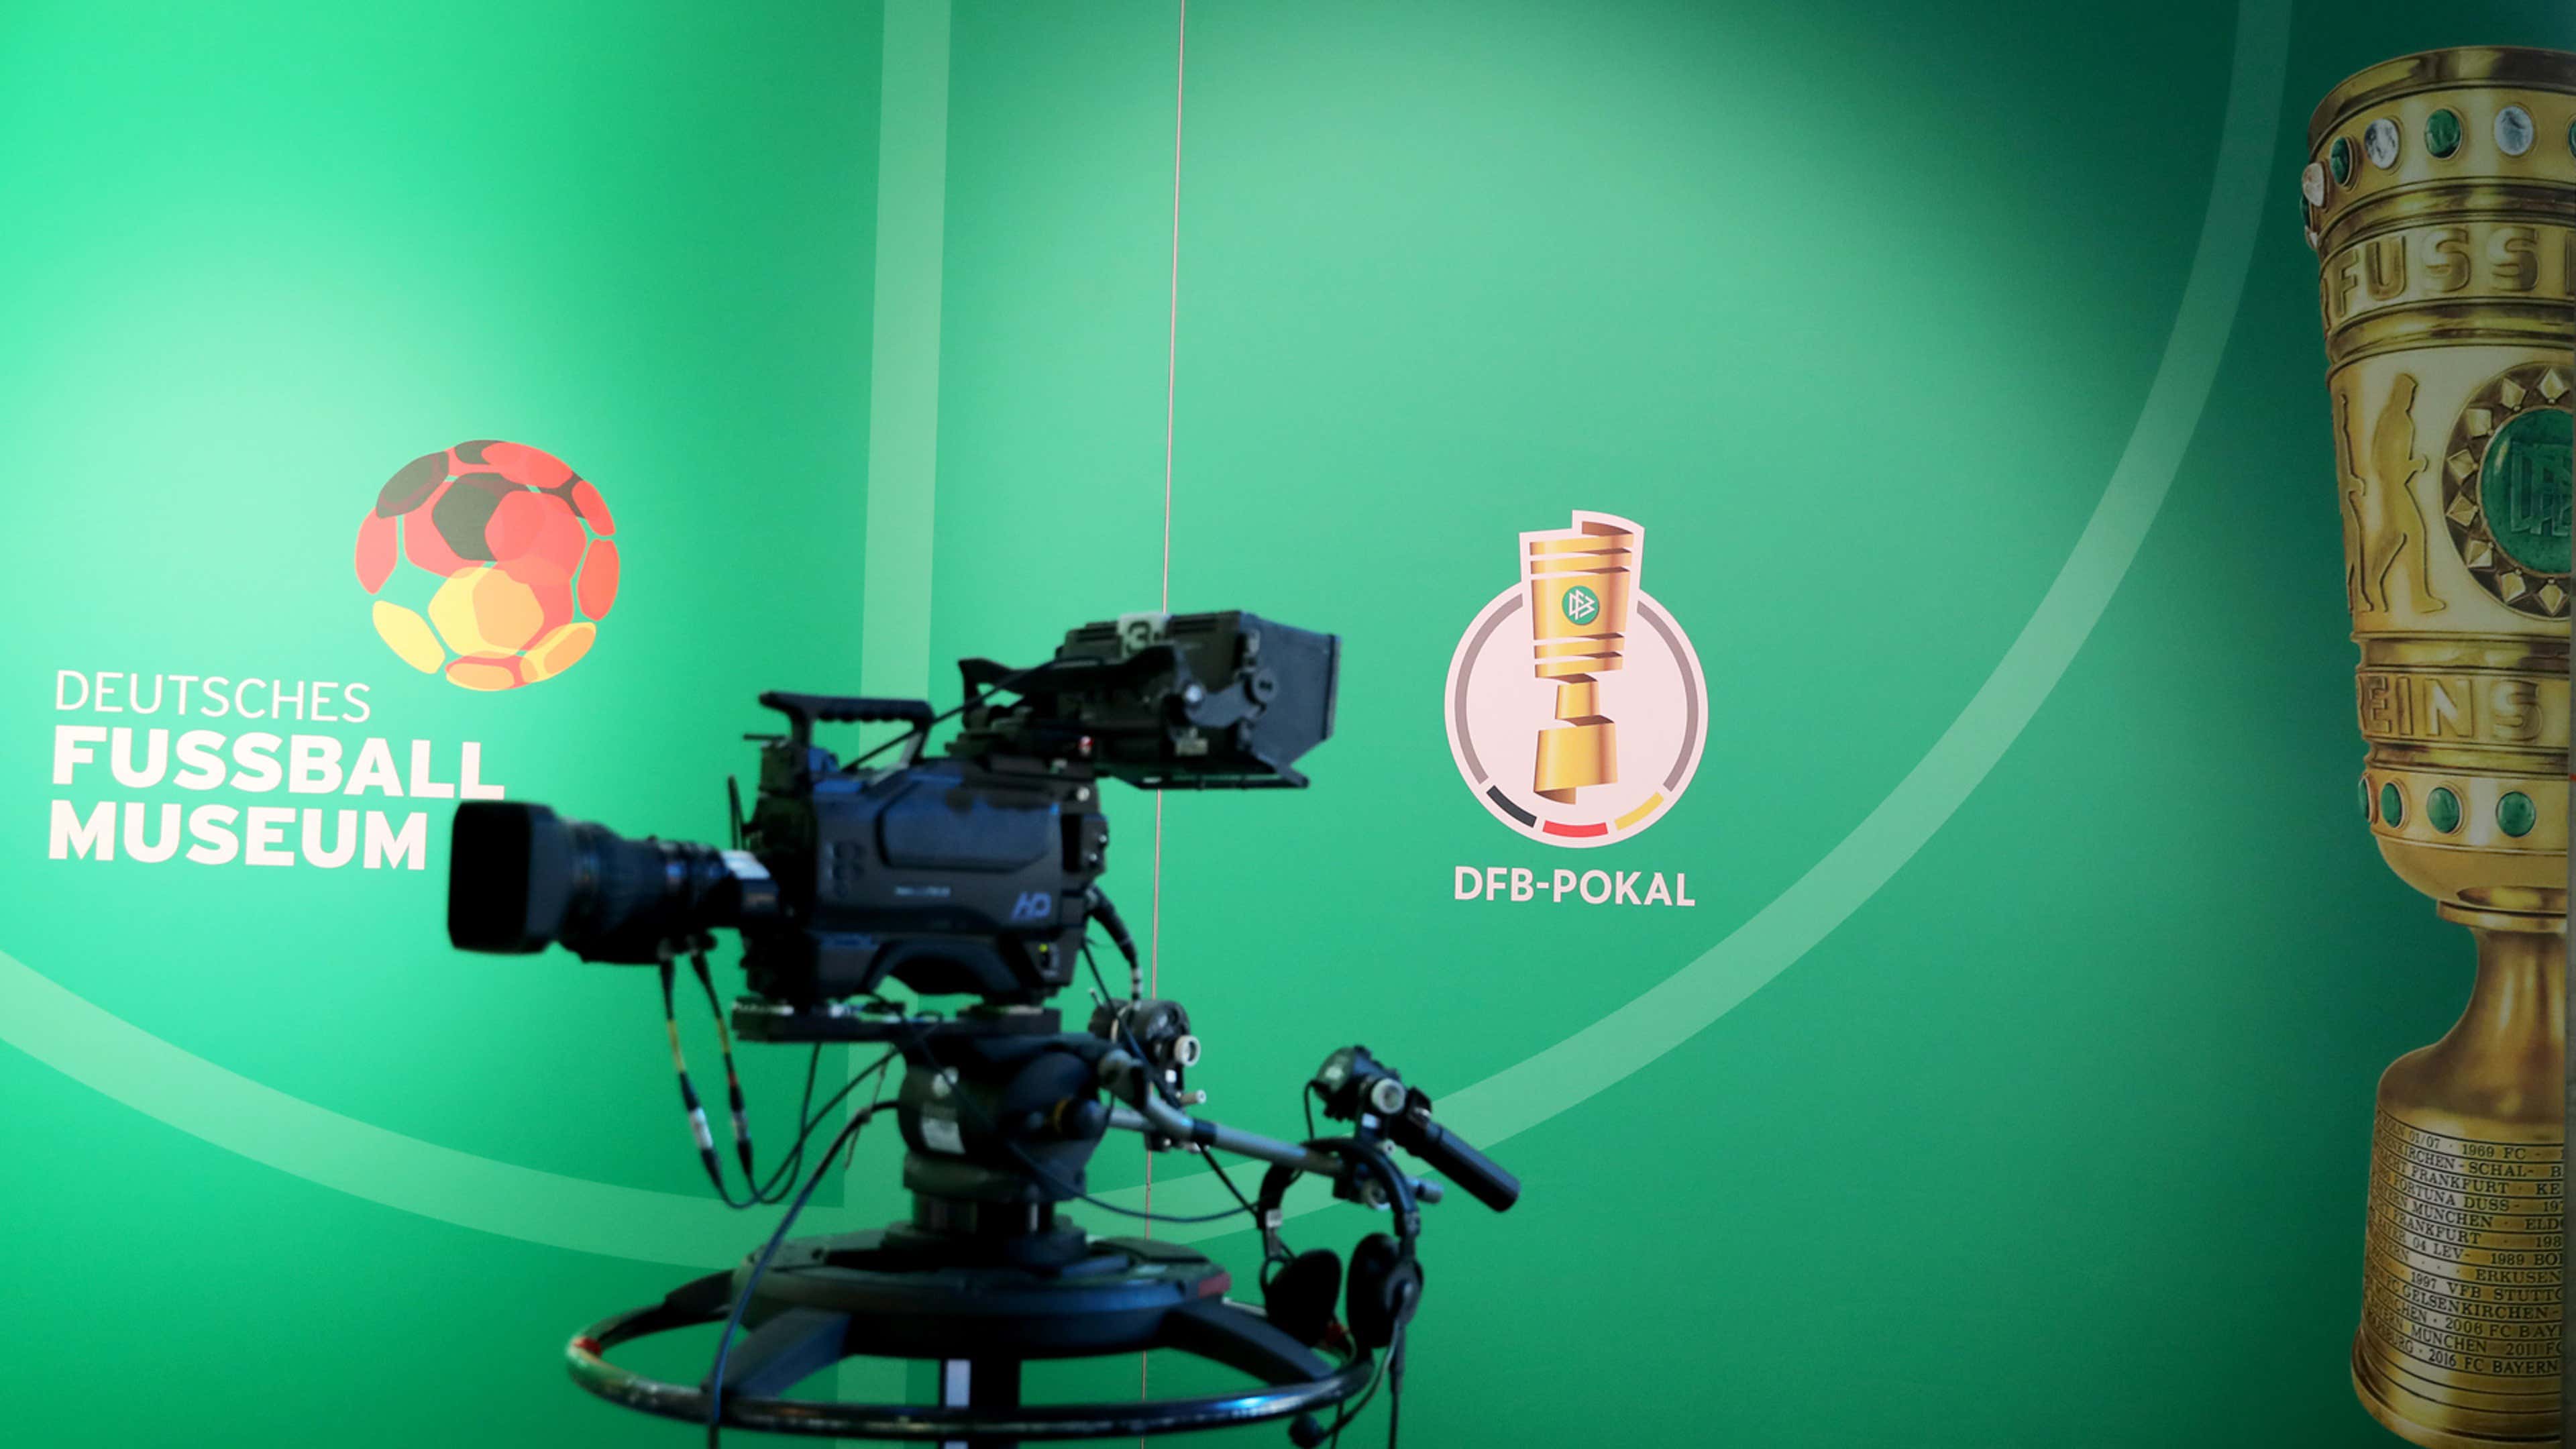 DFB-Pokal TV logo